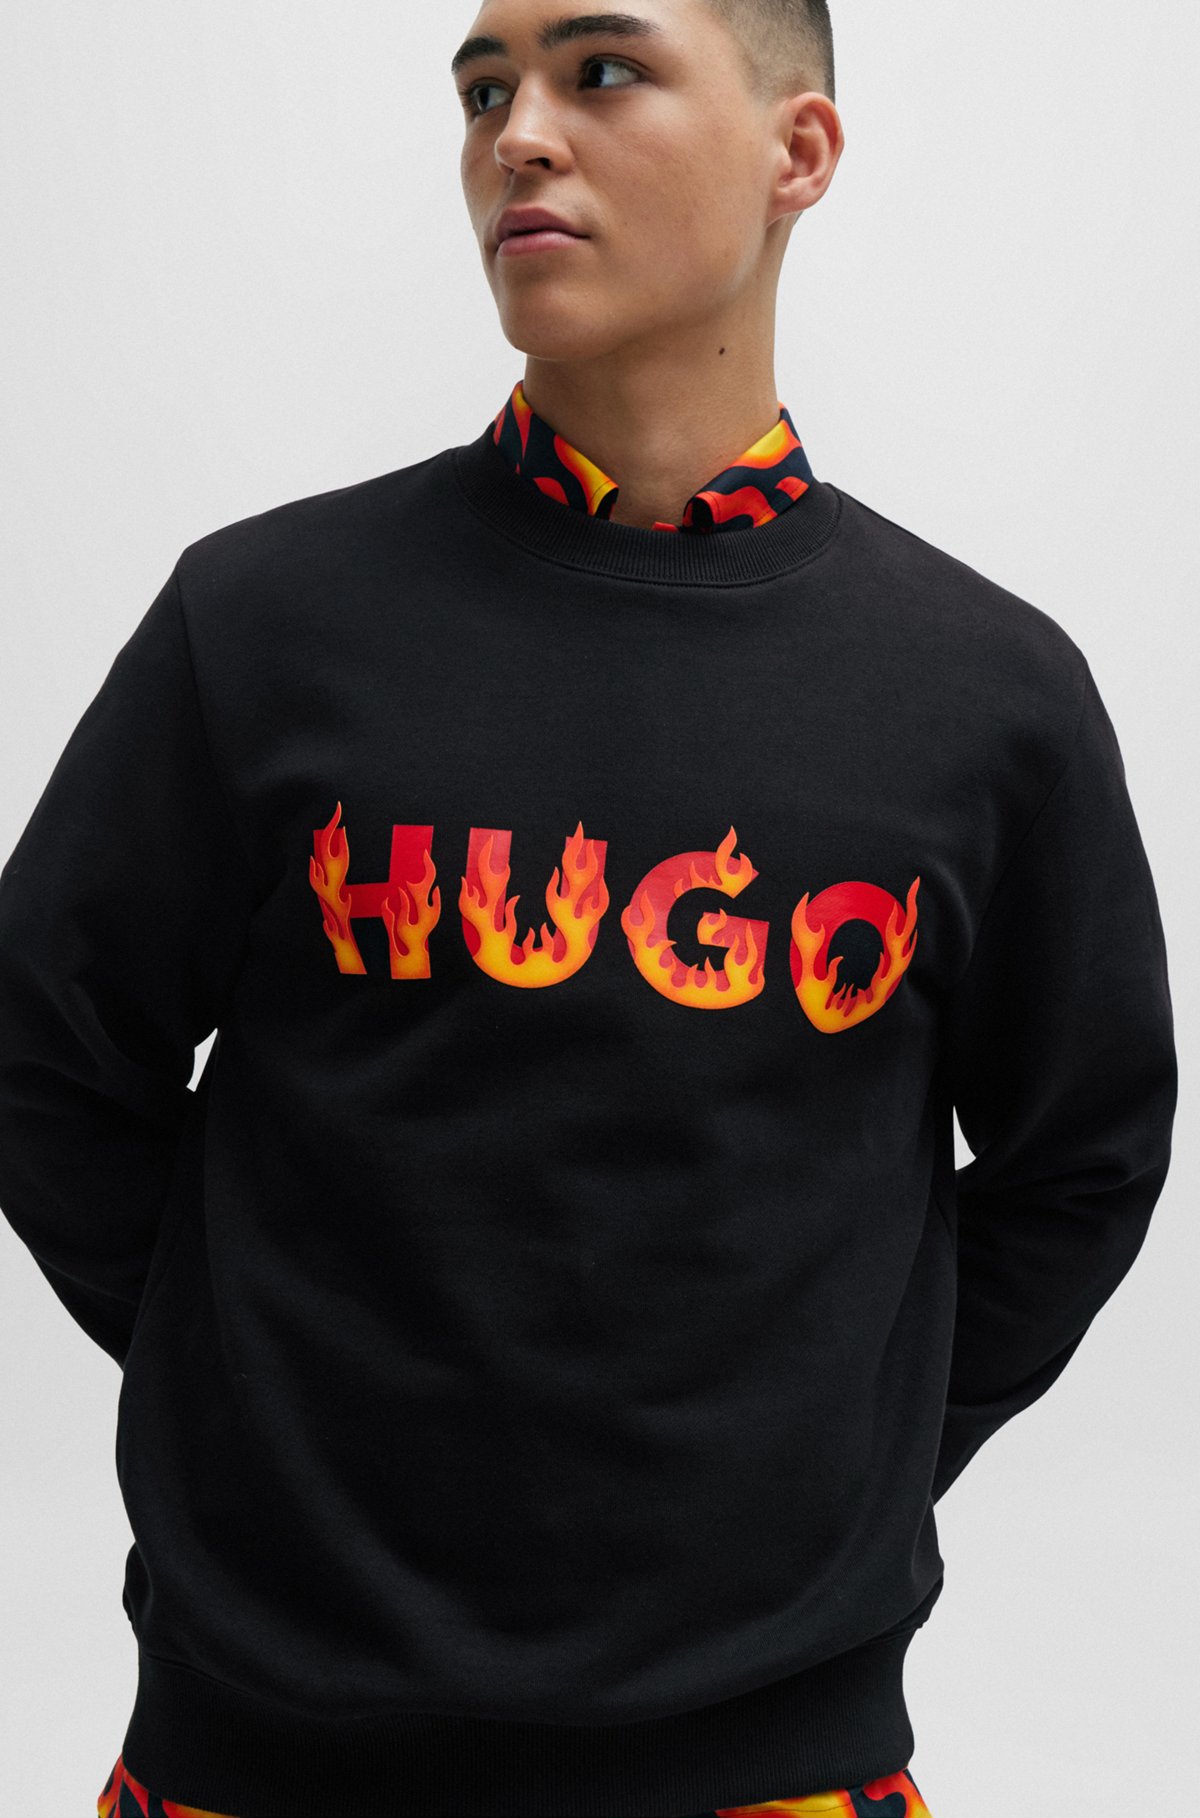 HUGO - Cotton-terry sweatshirt with puffed flame logo